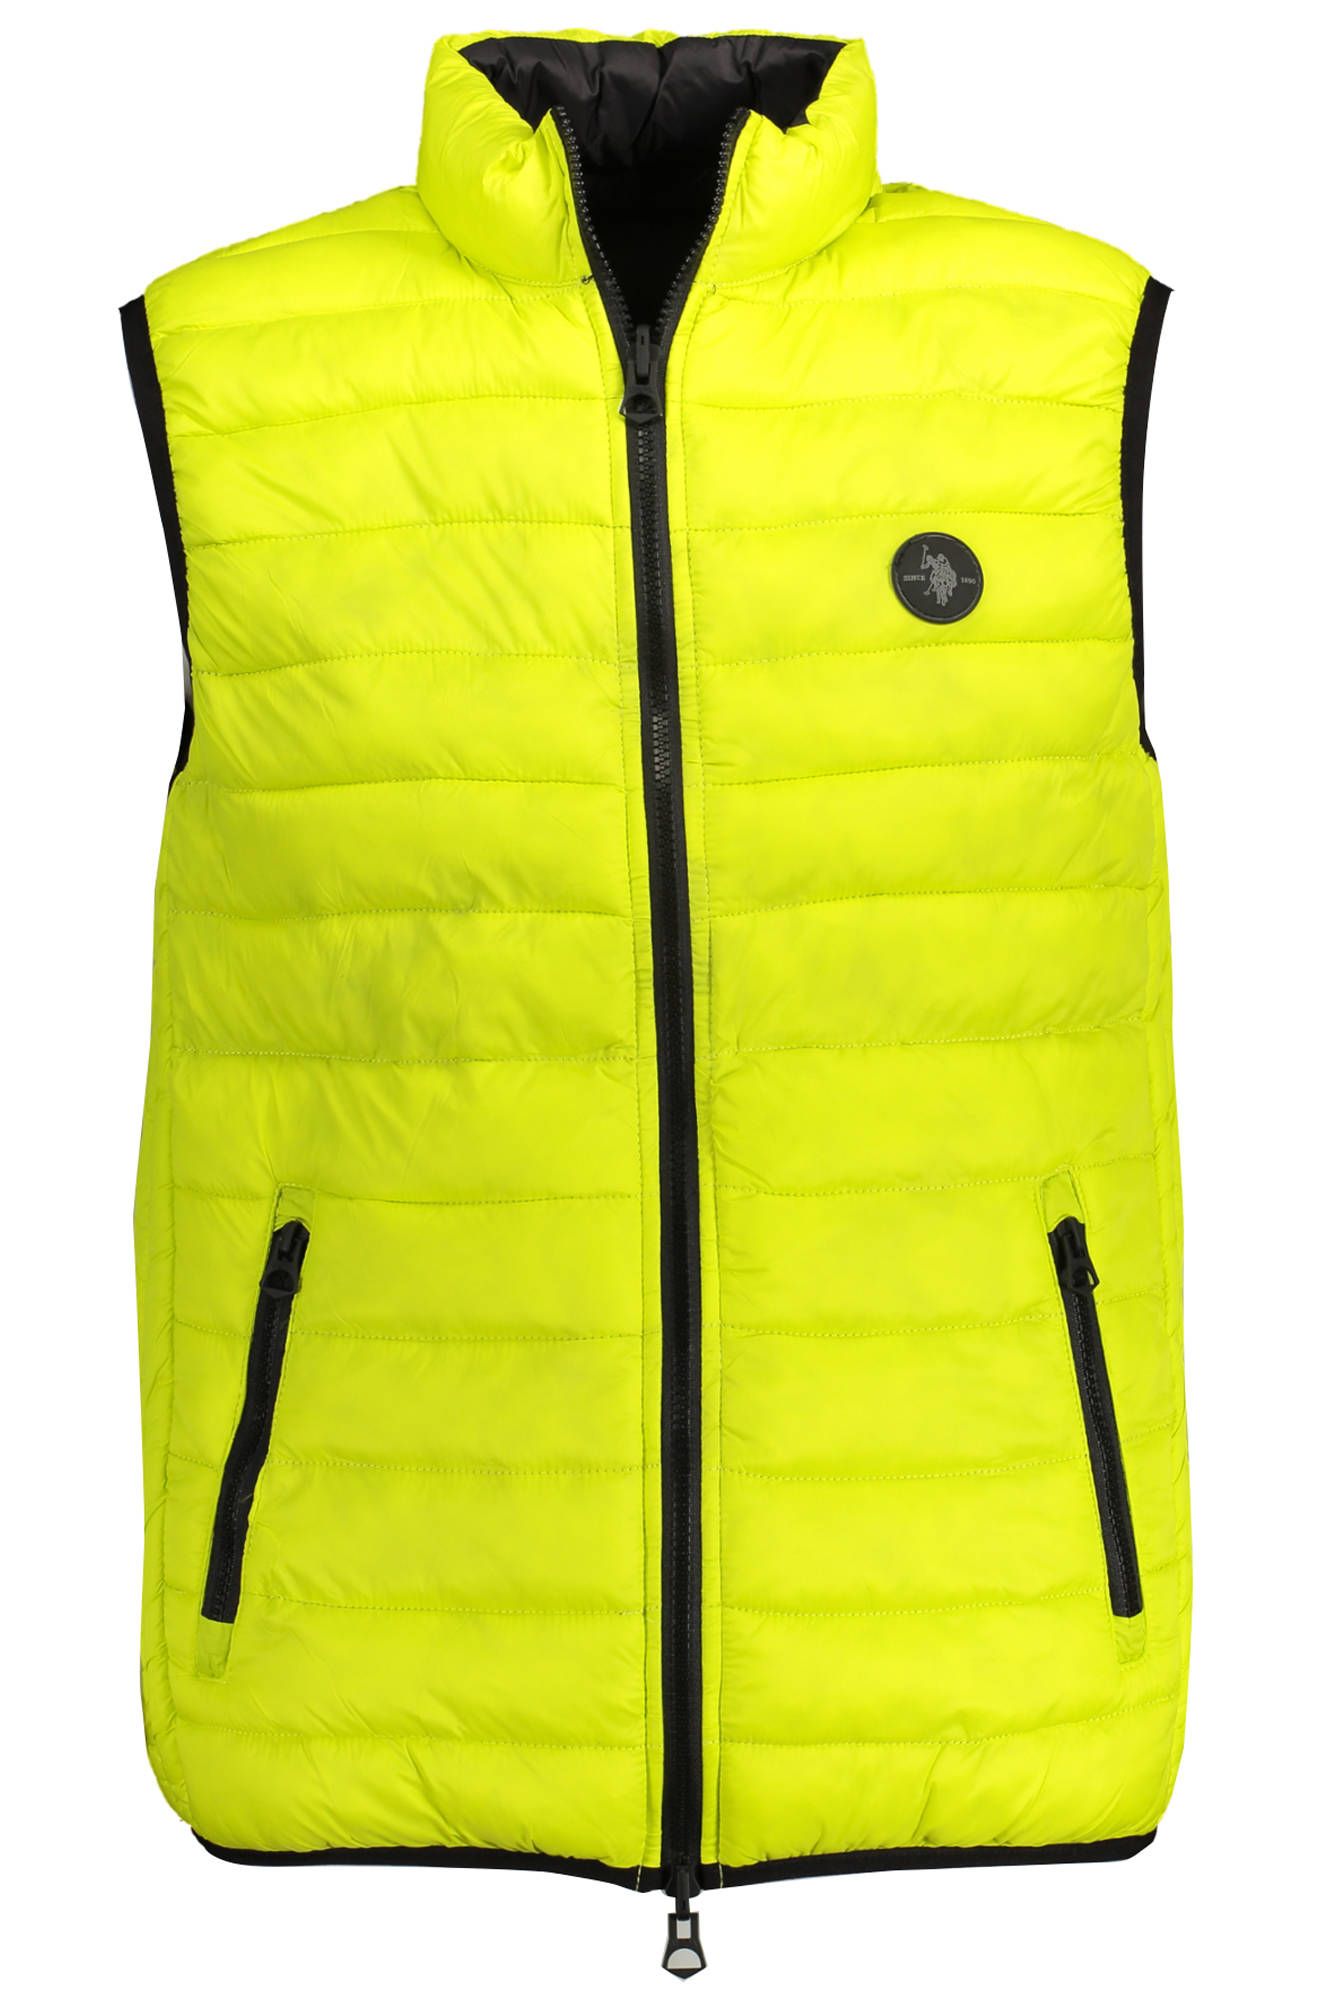 U.S. Polo Assn. Yellow Nylon Jacket